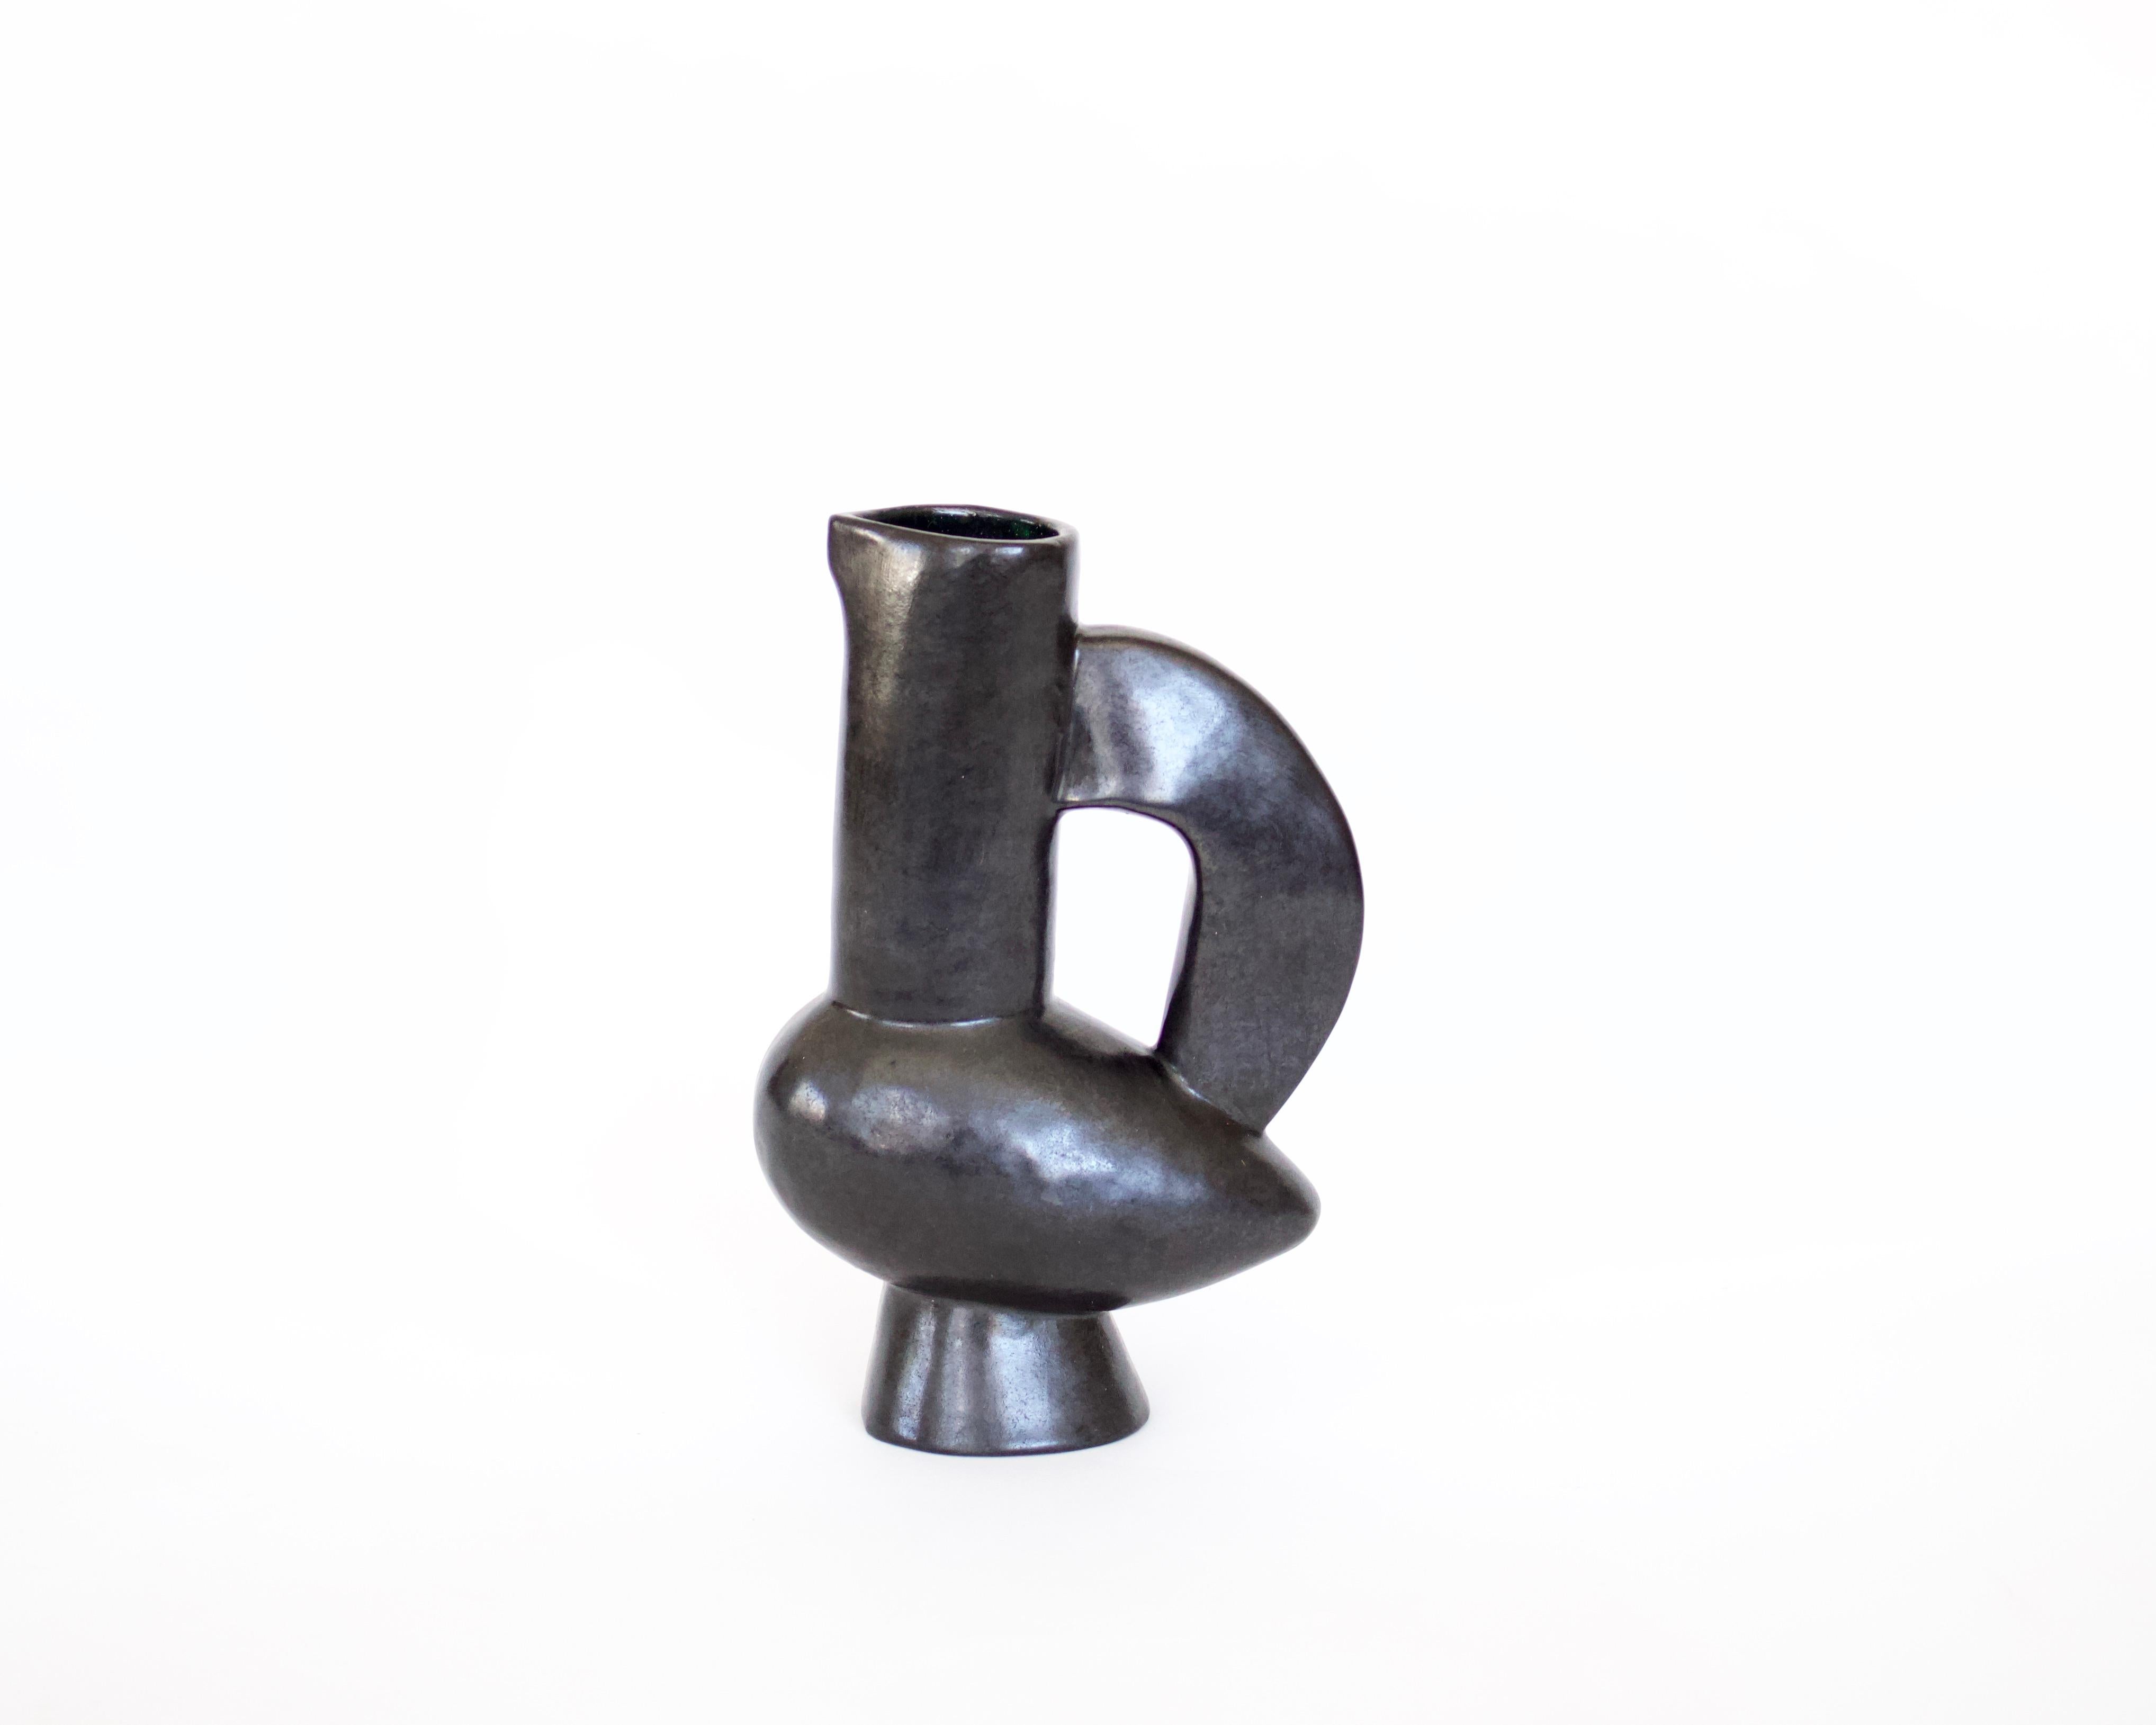 Jacques Blin French ceramic artist black ceramic vase, pitcher or sculpture reminiscent of a bird. 
Similar ceramic piece pictured on p 32 of Jacques Blin, Ceramiste & Porteur d